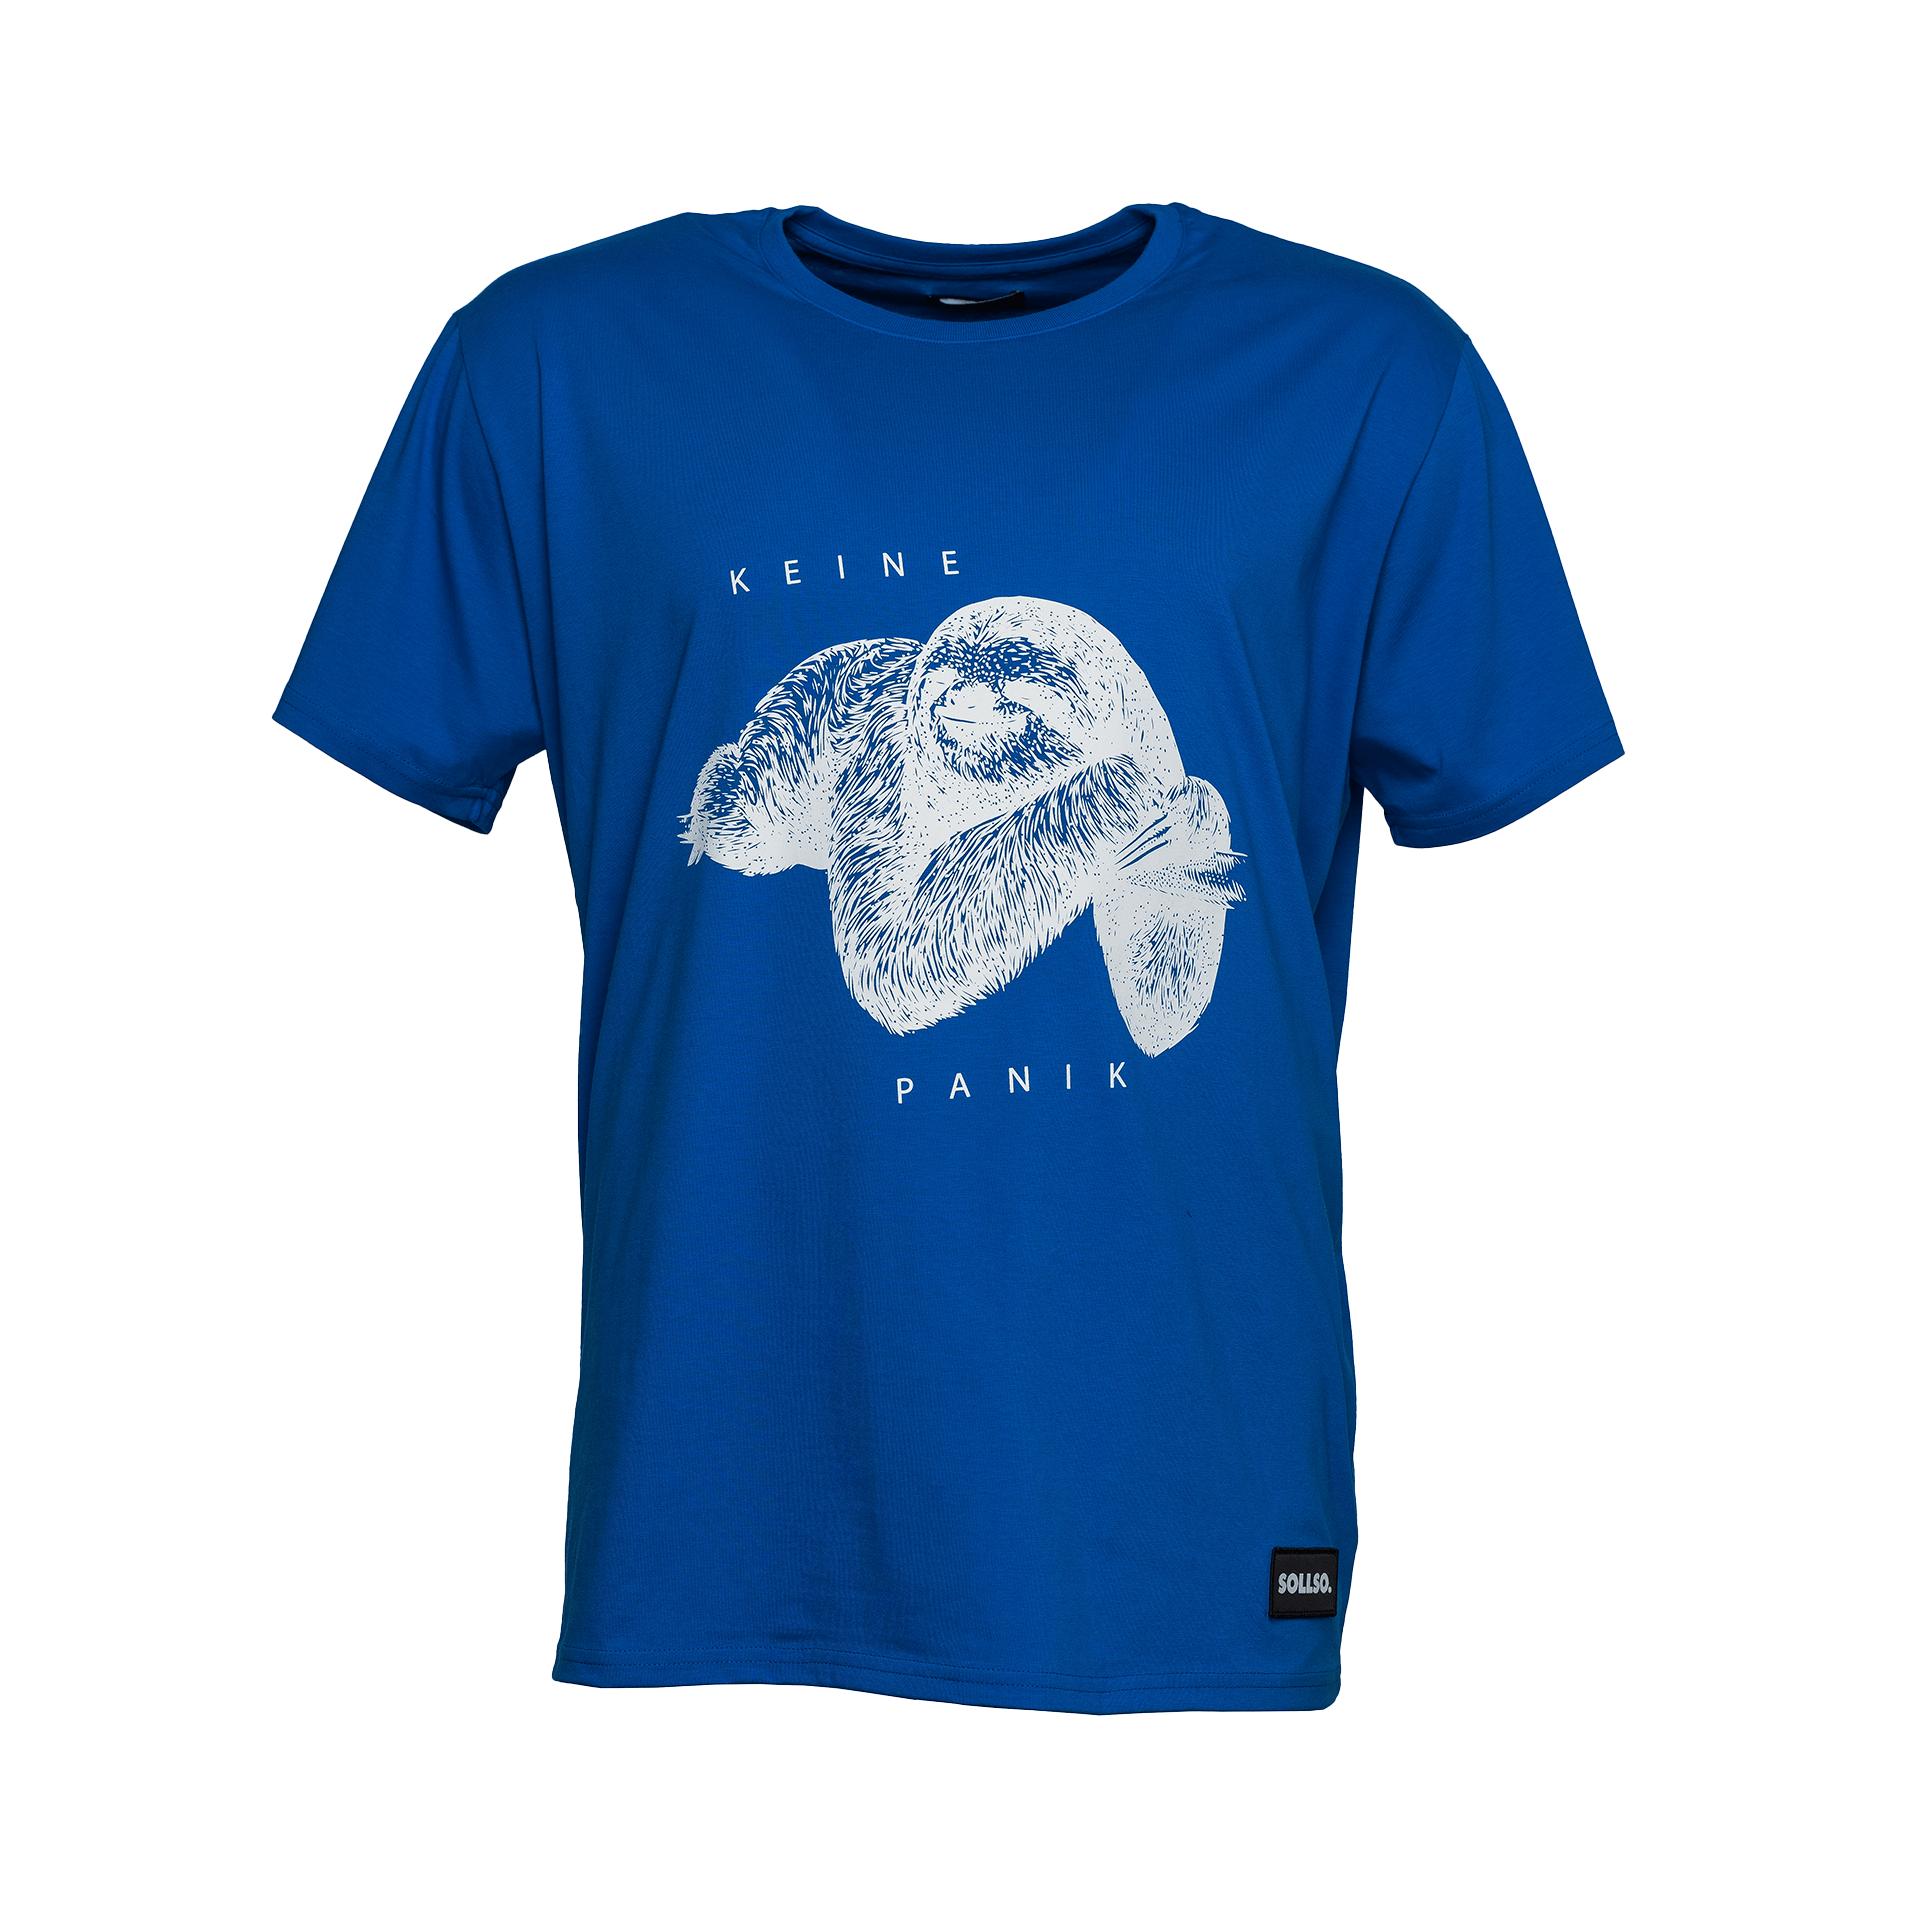 SOLLSO. T-Shirt "Keine Panik Faultier", Farbe Ocean Blue, Größe XL